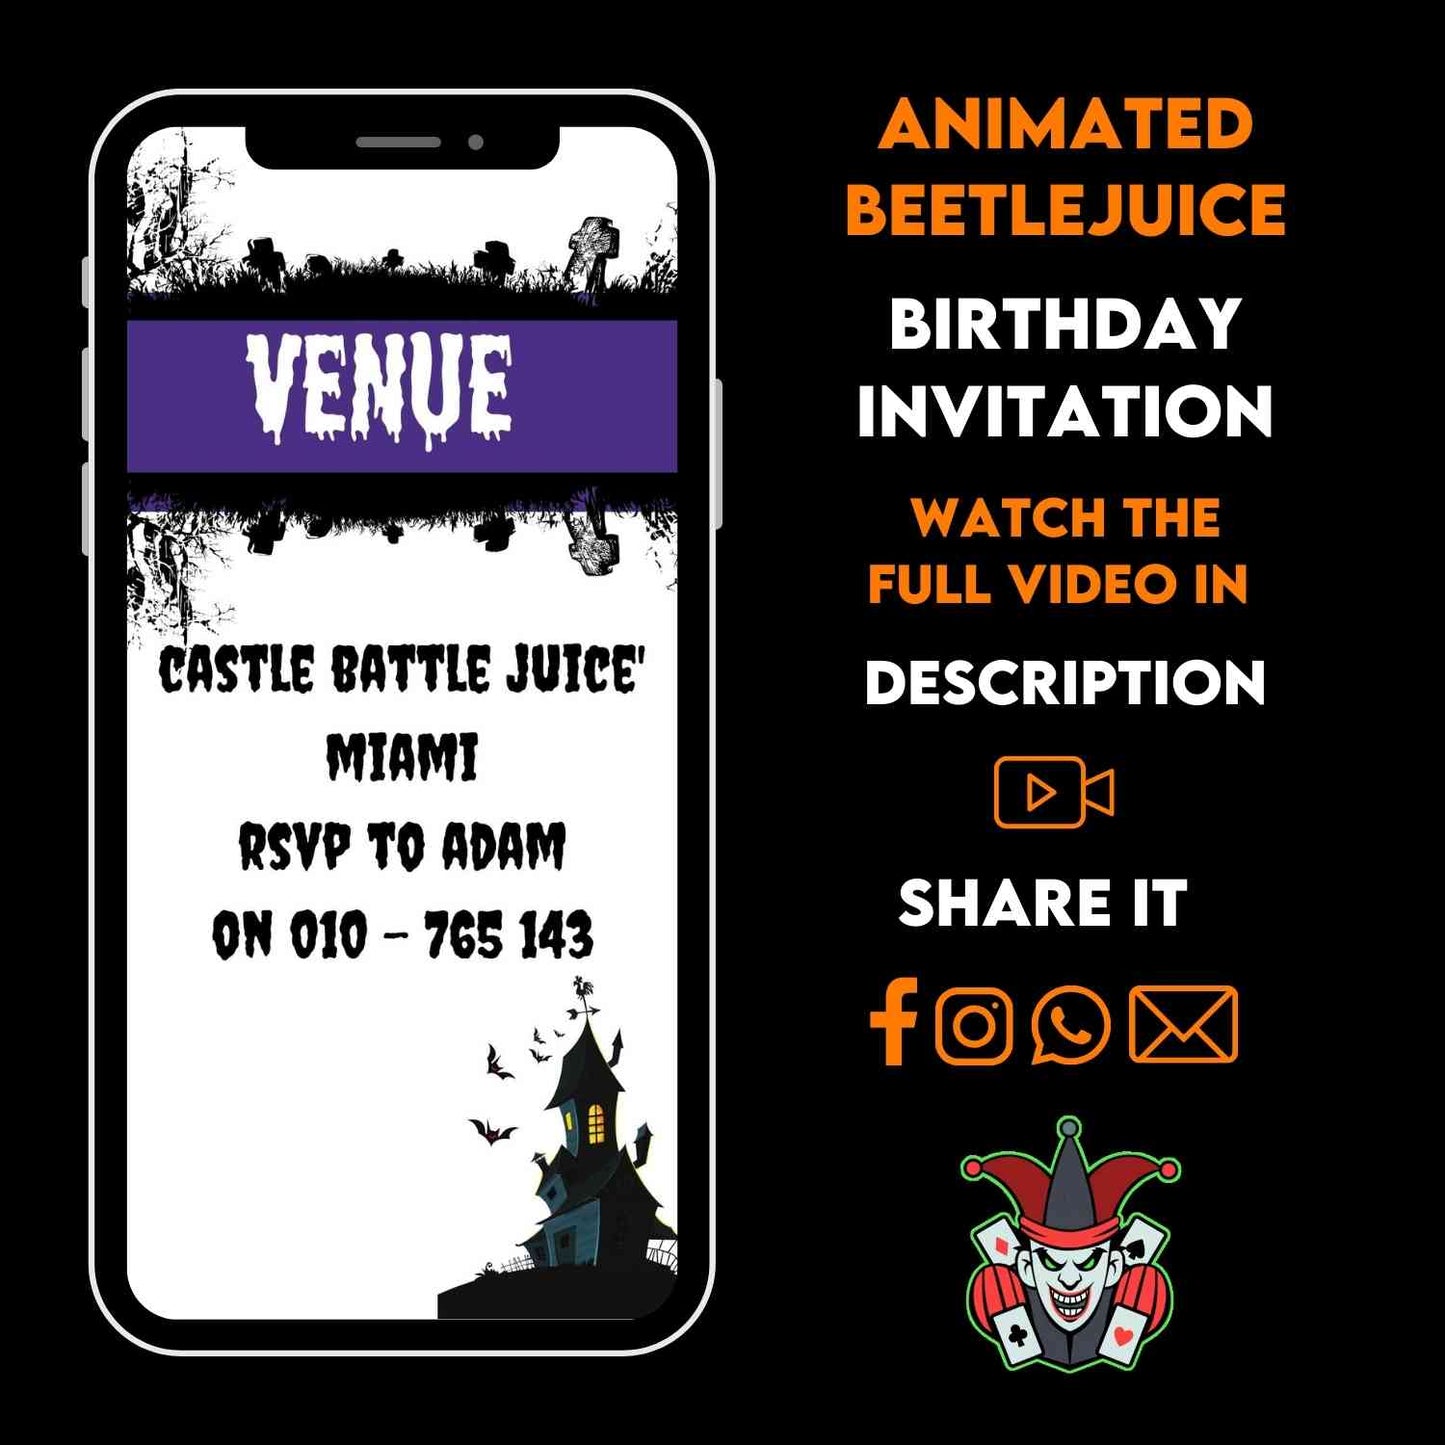 Animated Beetlejuice Birthday Party Invitation - Halloween Video Party Invite